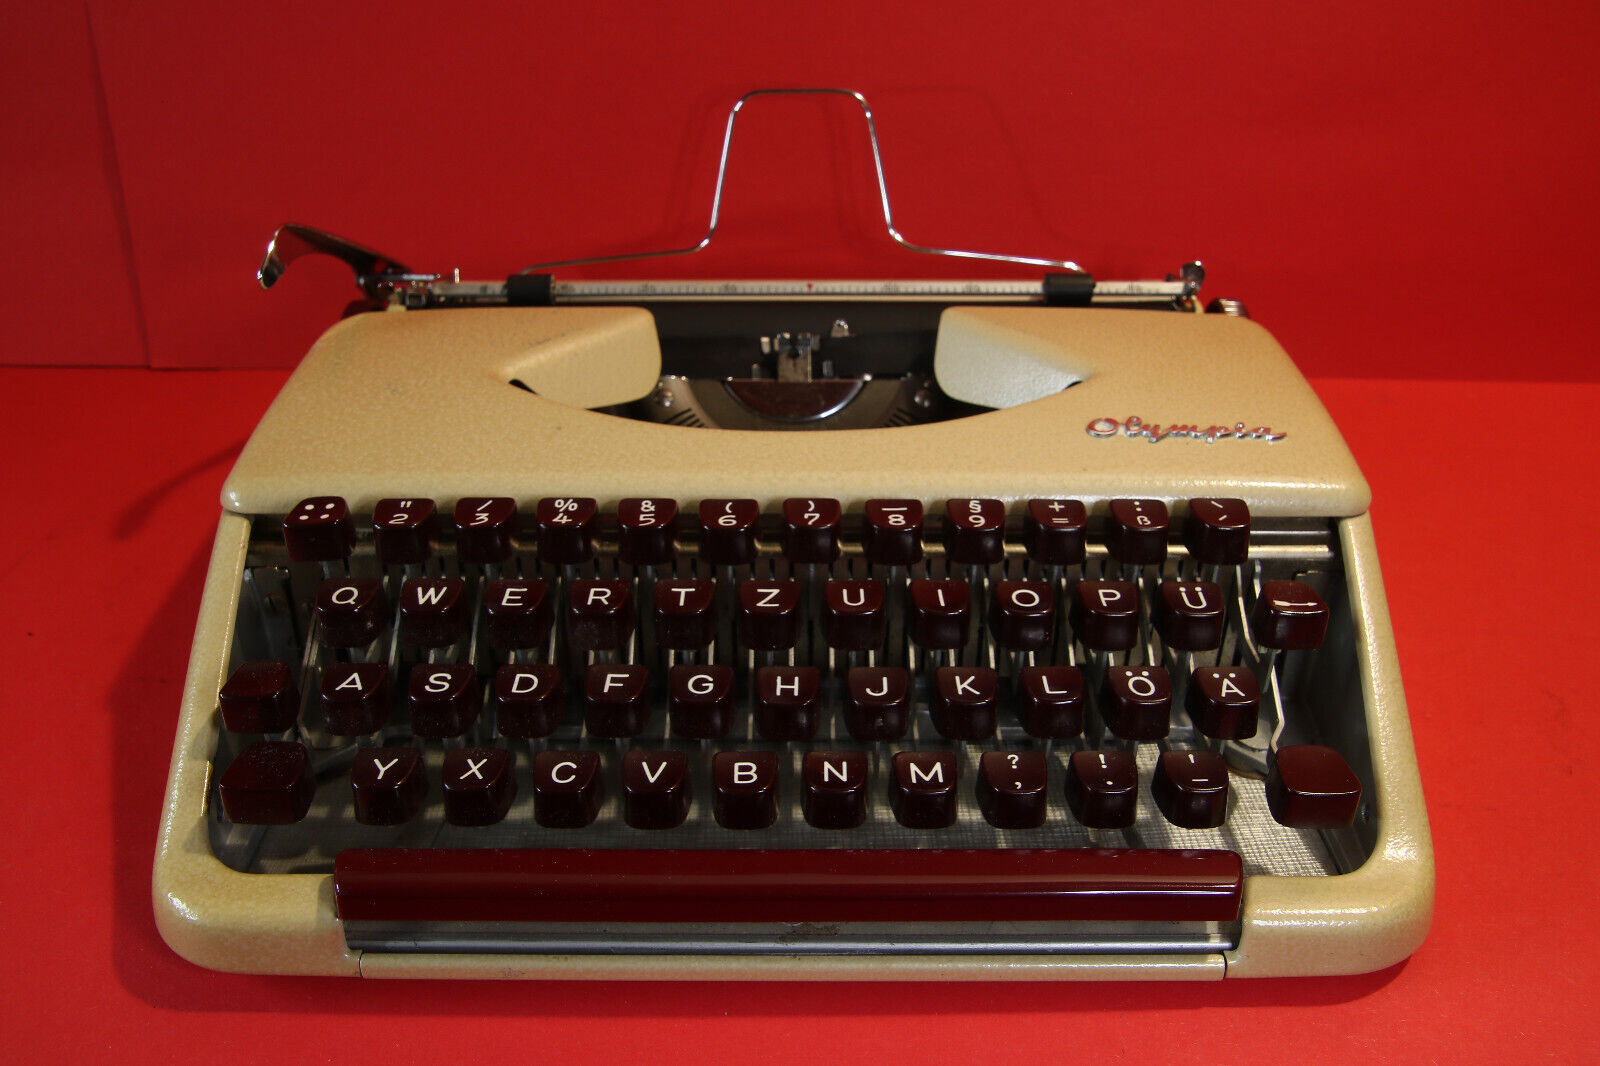 Vintage Olympia Splendid  typewriter in good working condition